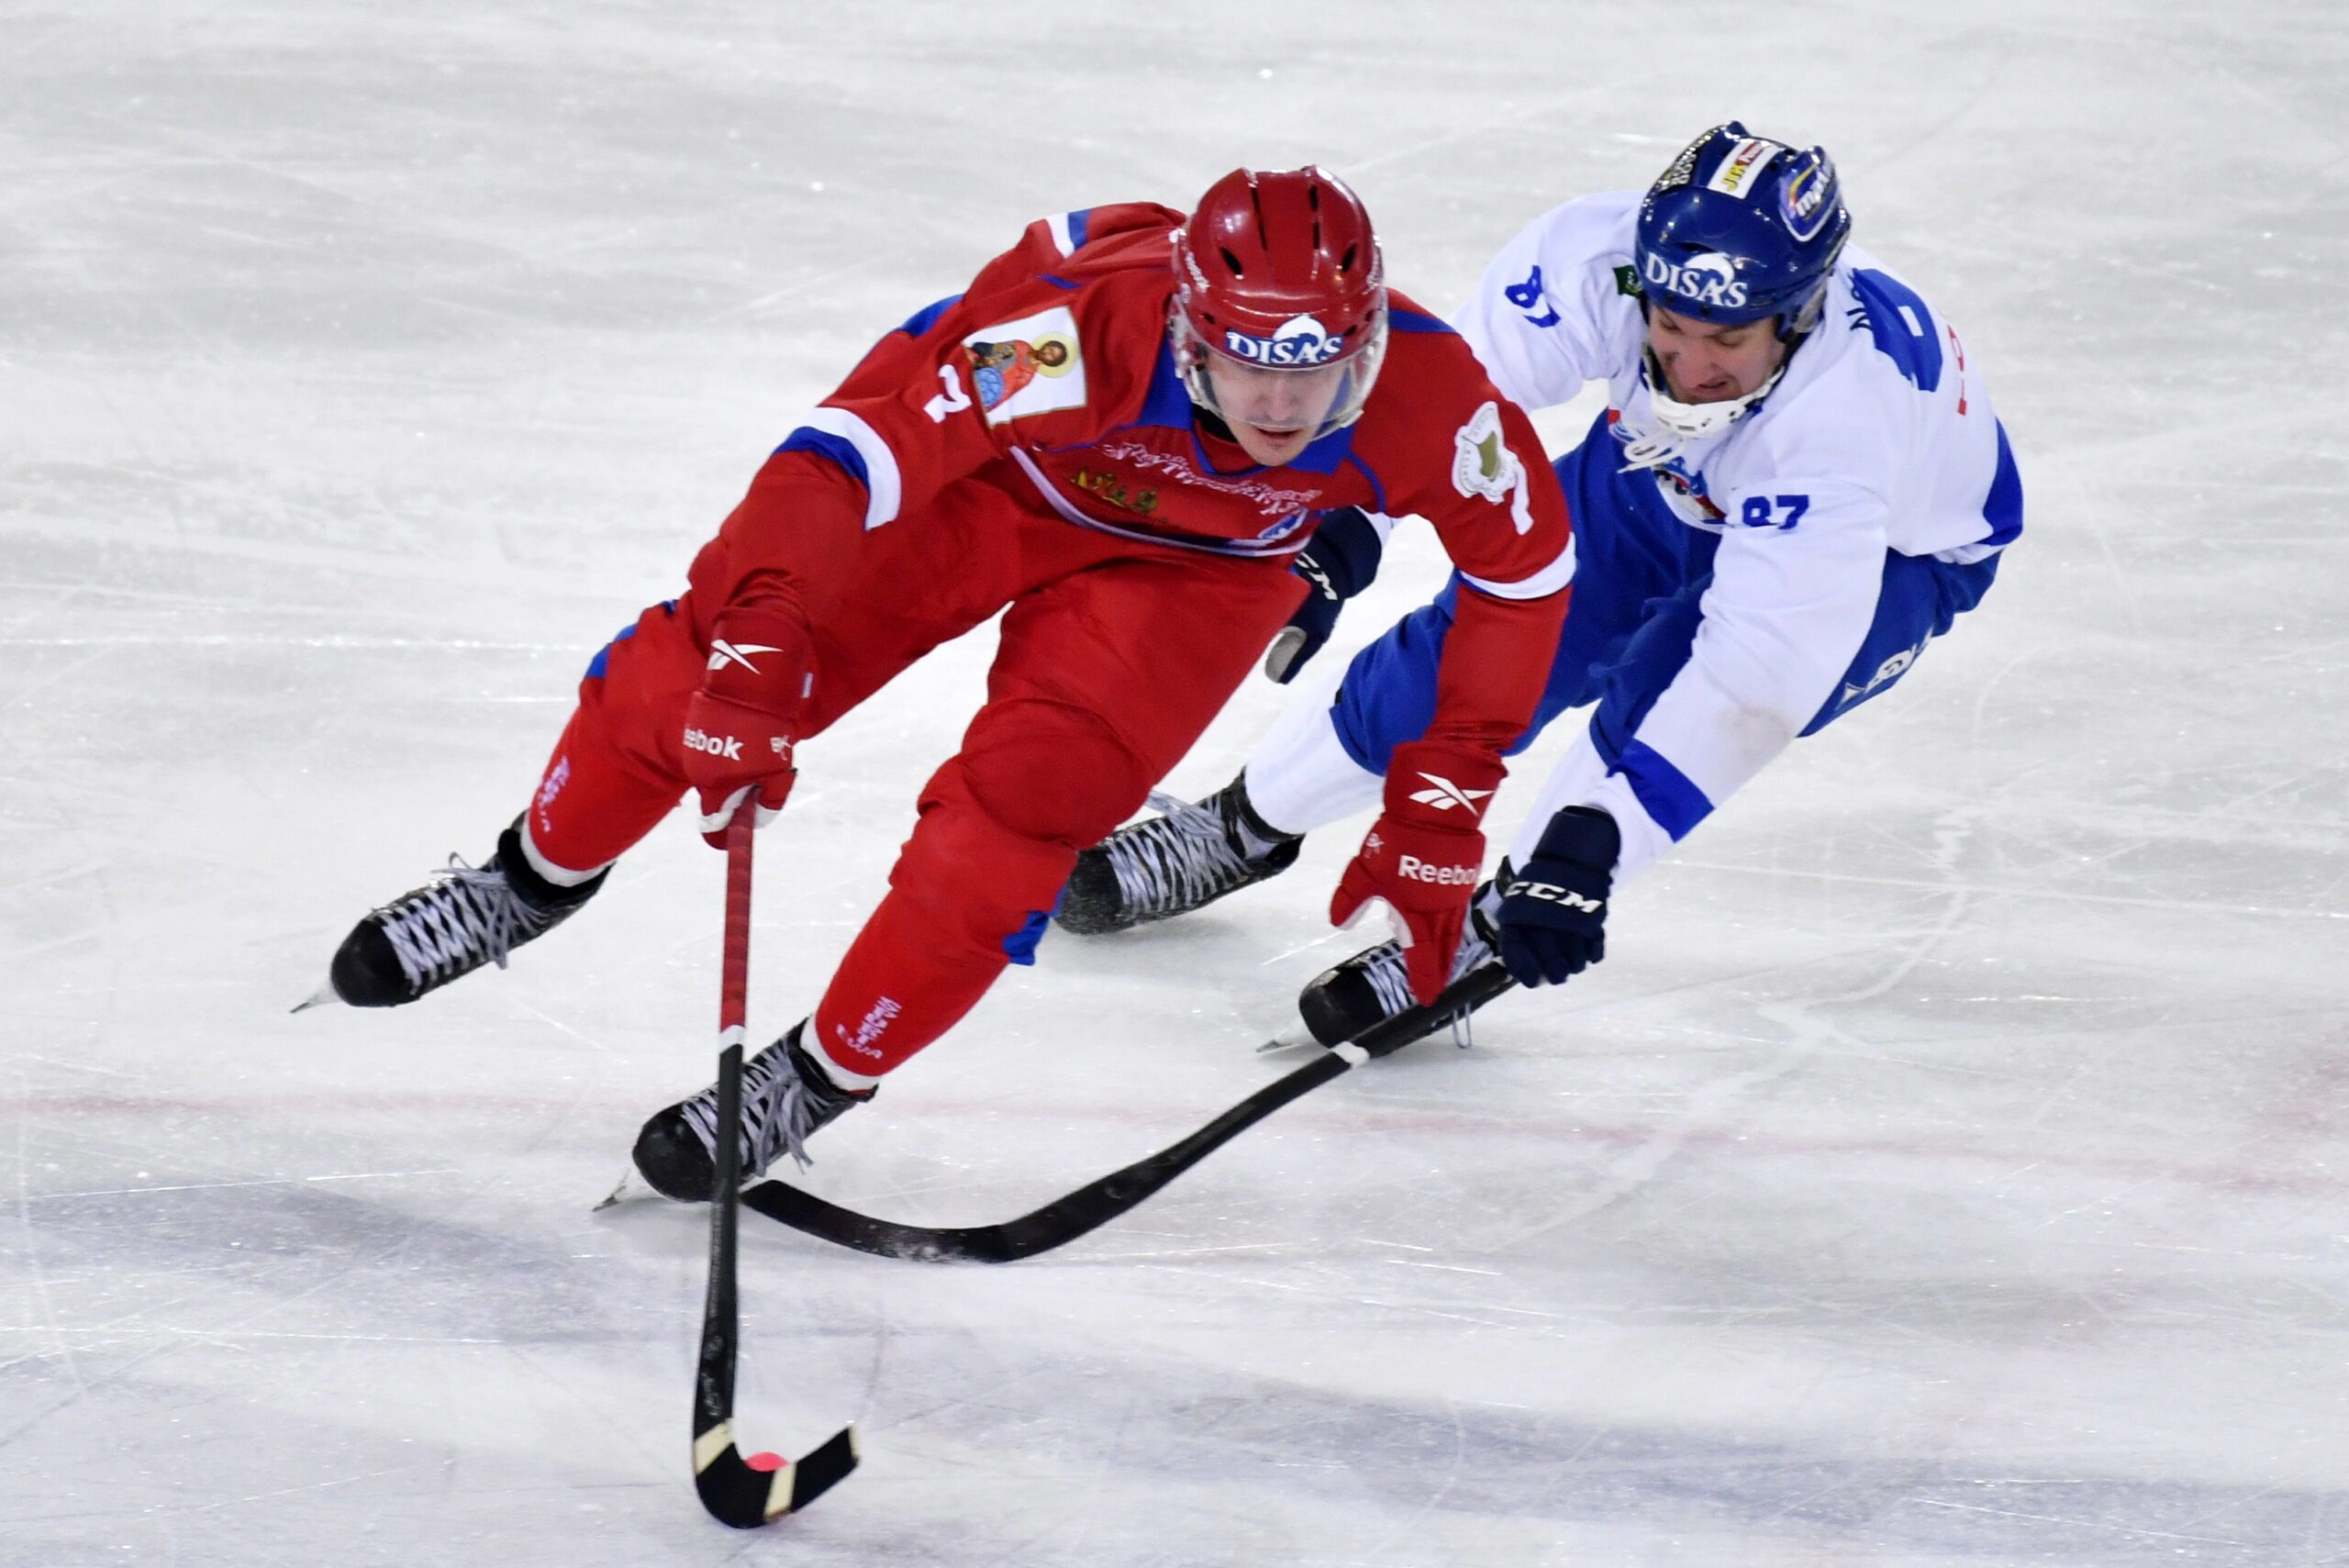 2018 Bandy World Championship, semi-finals: Russia 8 - 2 Finland